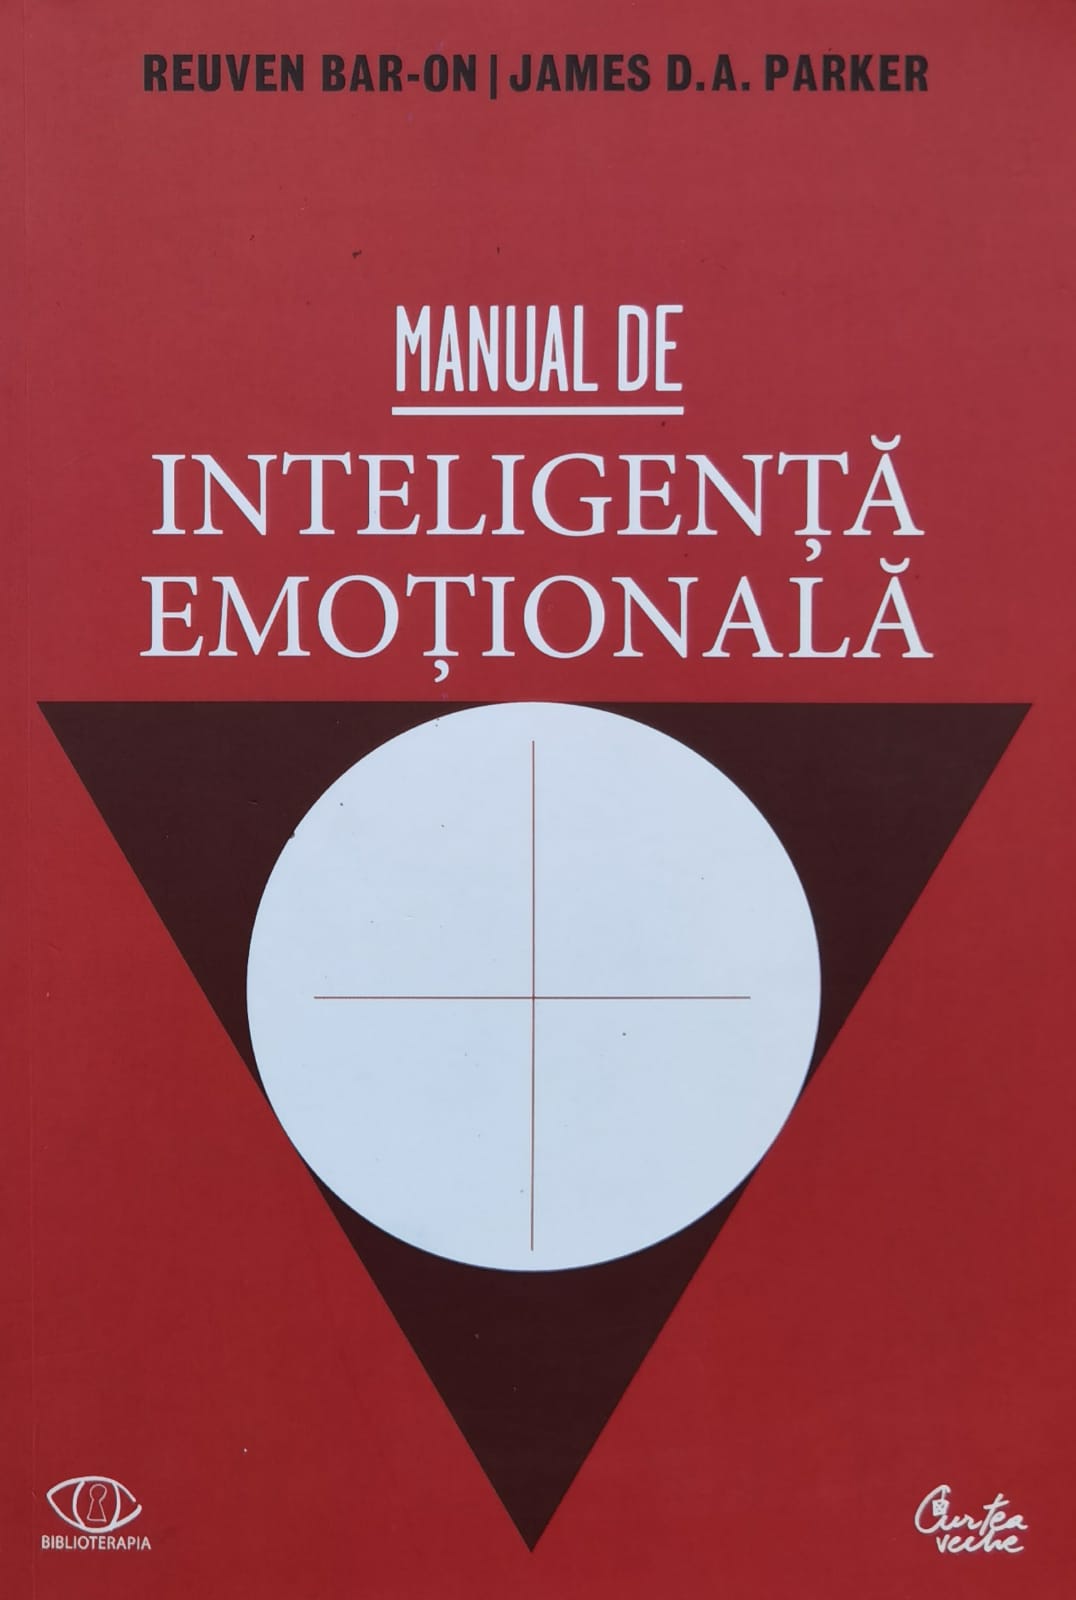 manual de inteligenta emotionala                                                                     reuven bar-on                                                                                       